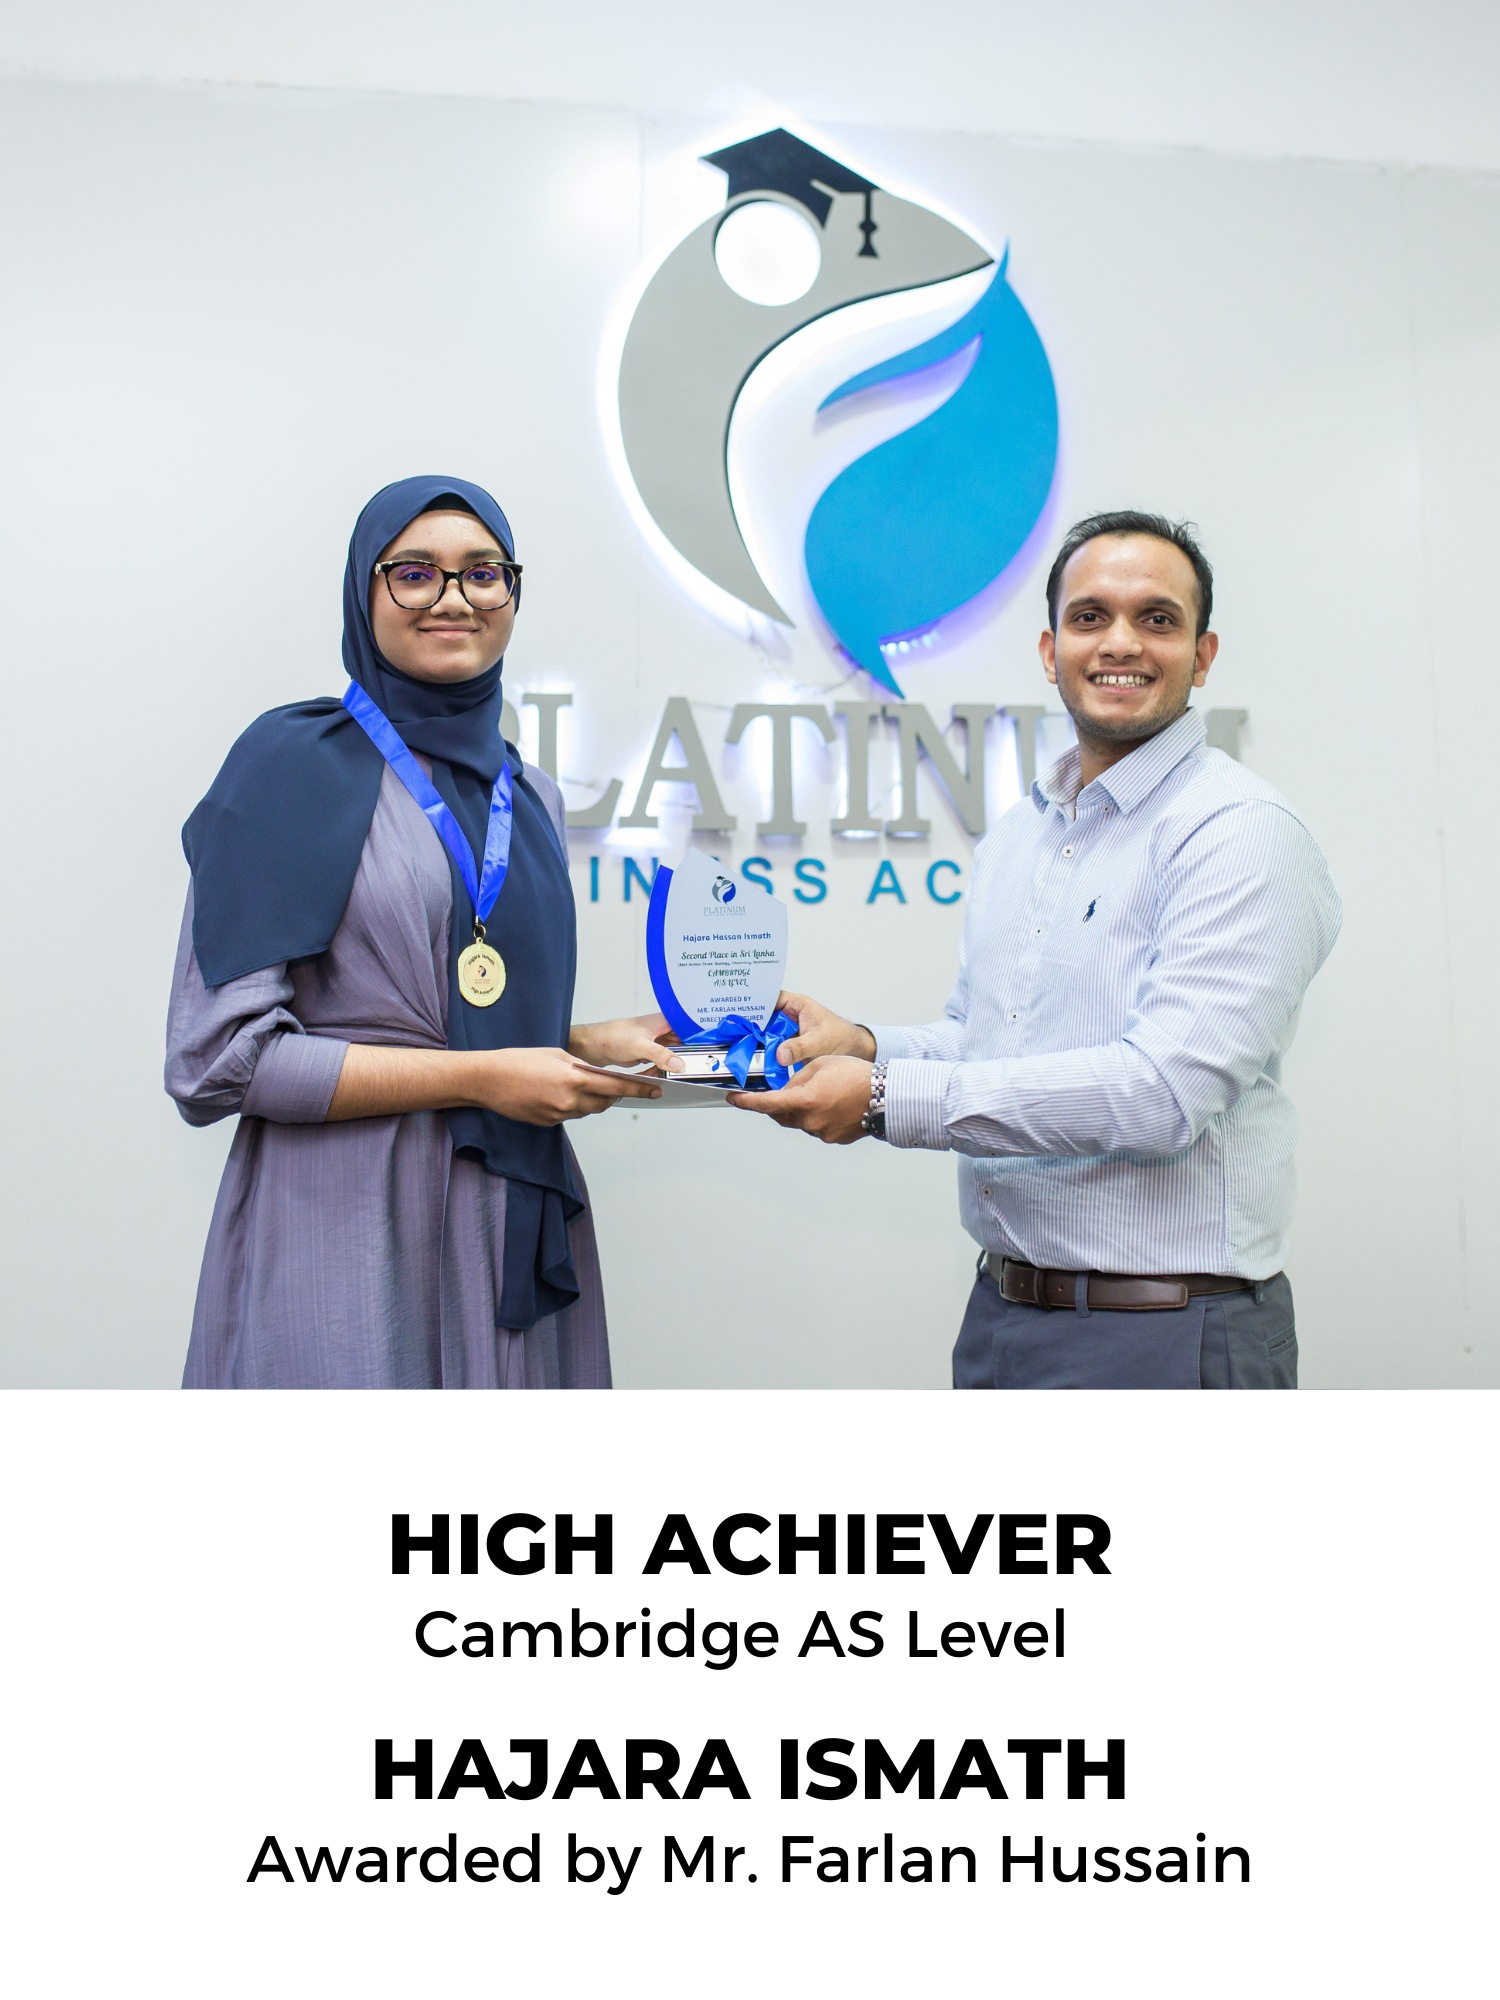 Cambridge AS Level High Achiever Winner: Hajara Ismath
Lecturer: Mr. Farlan Hussain